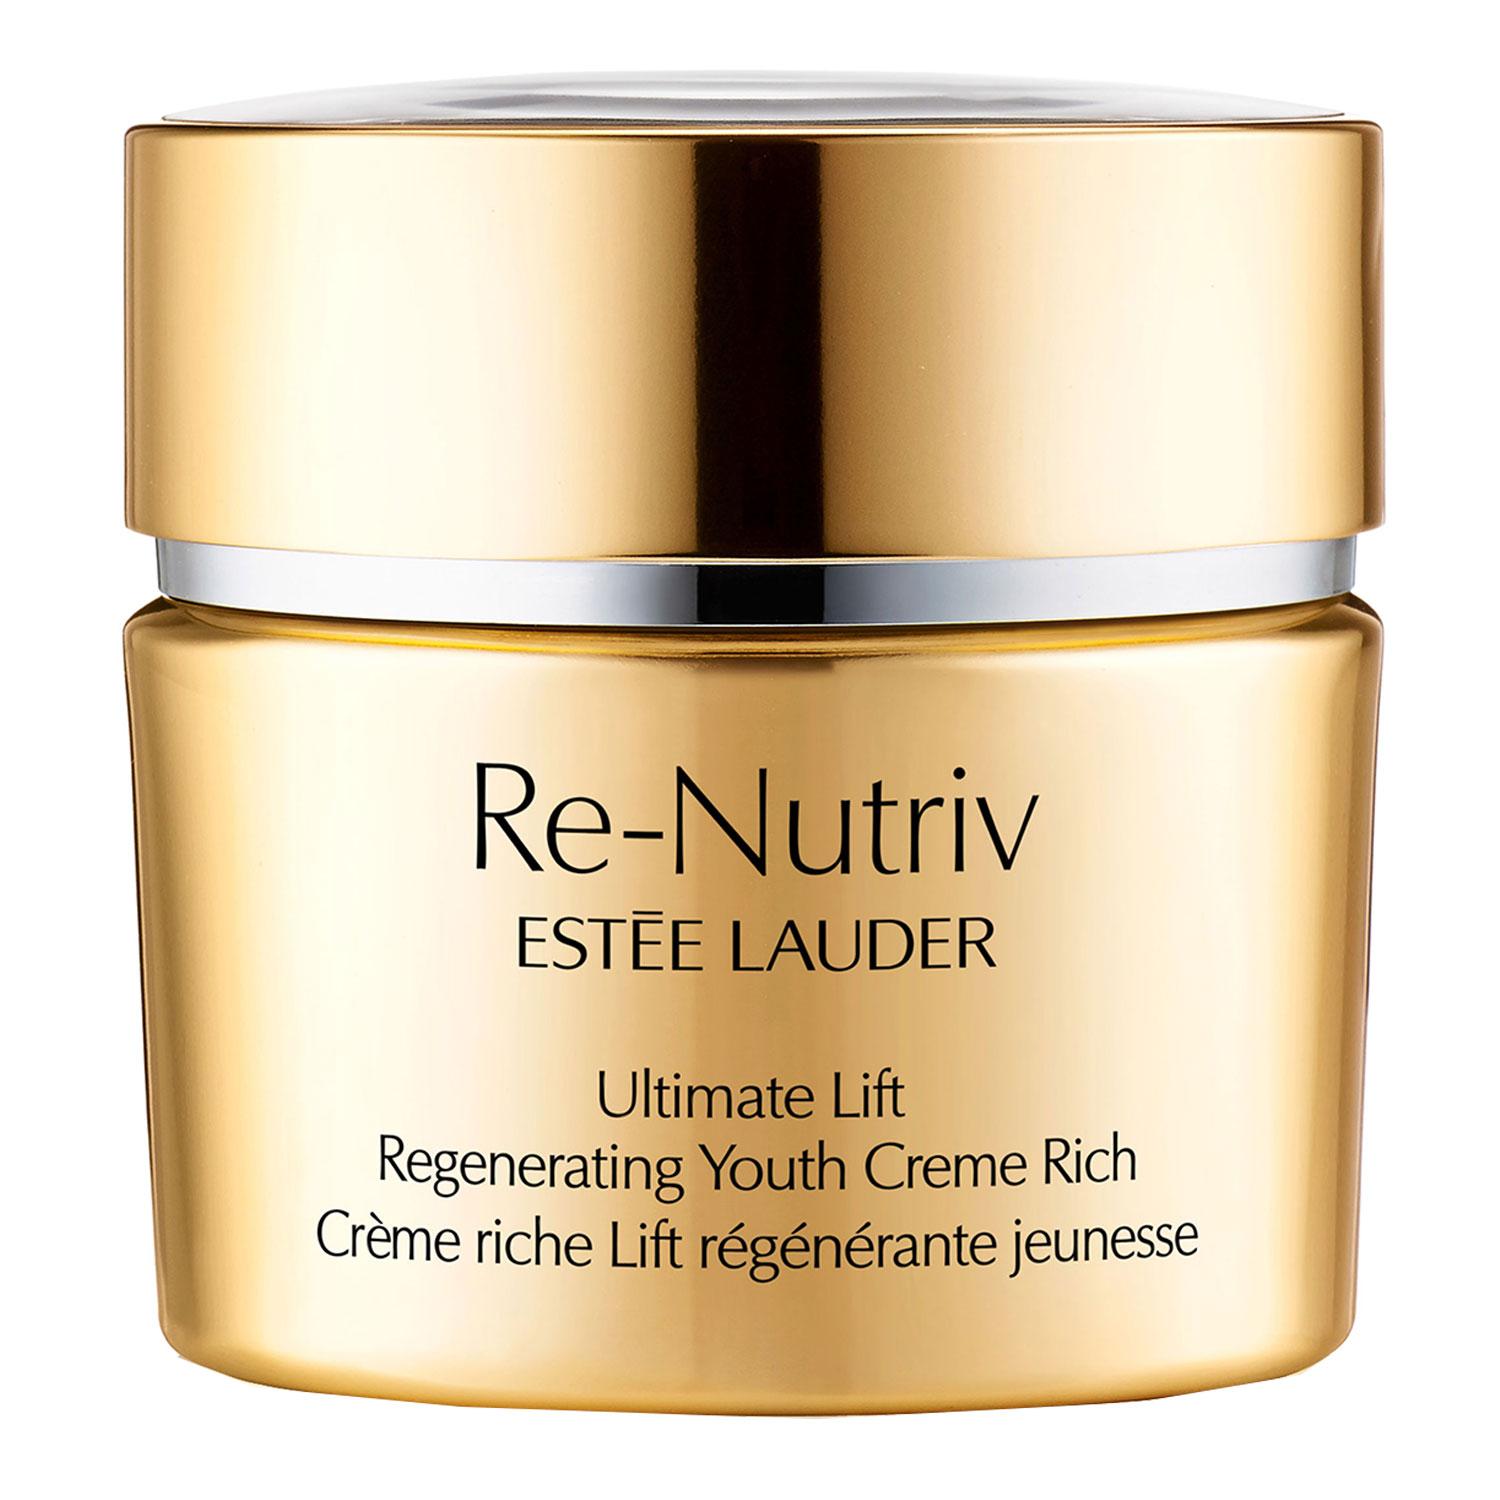 Re-Nutriv - Ultimate Lift Regenerating Youth Crème Rich